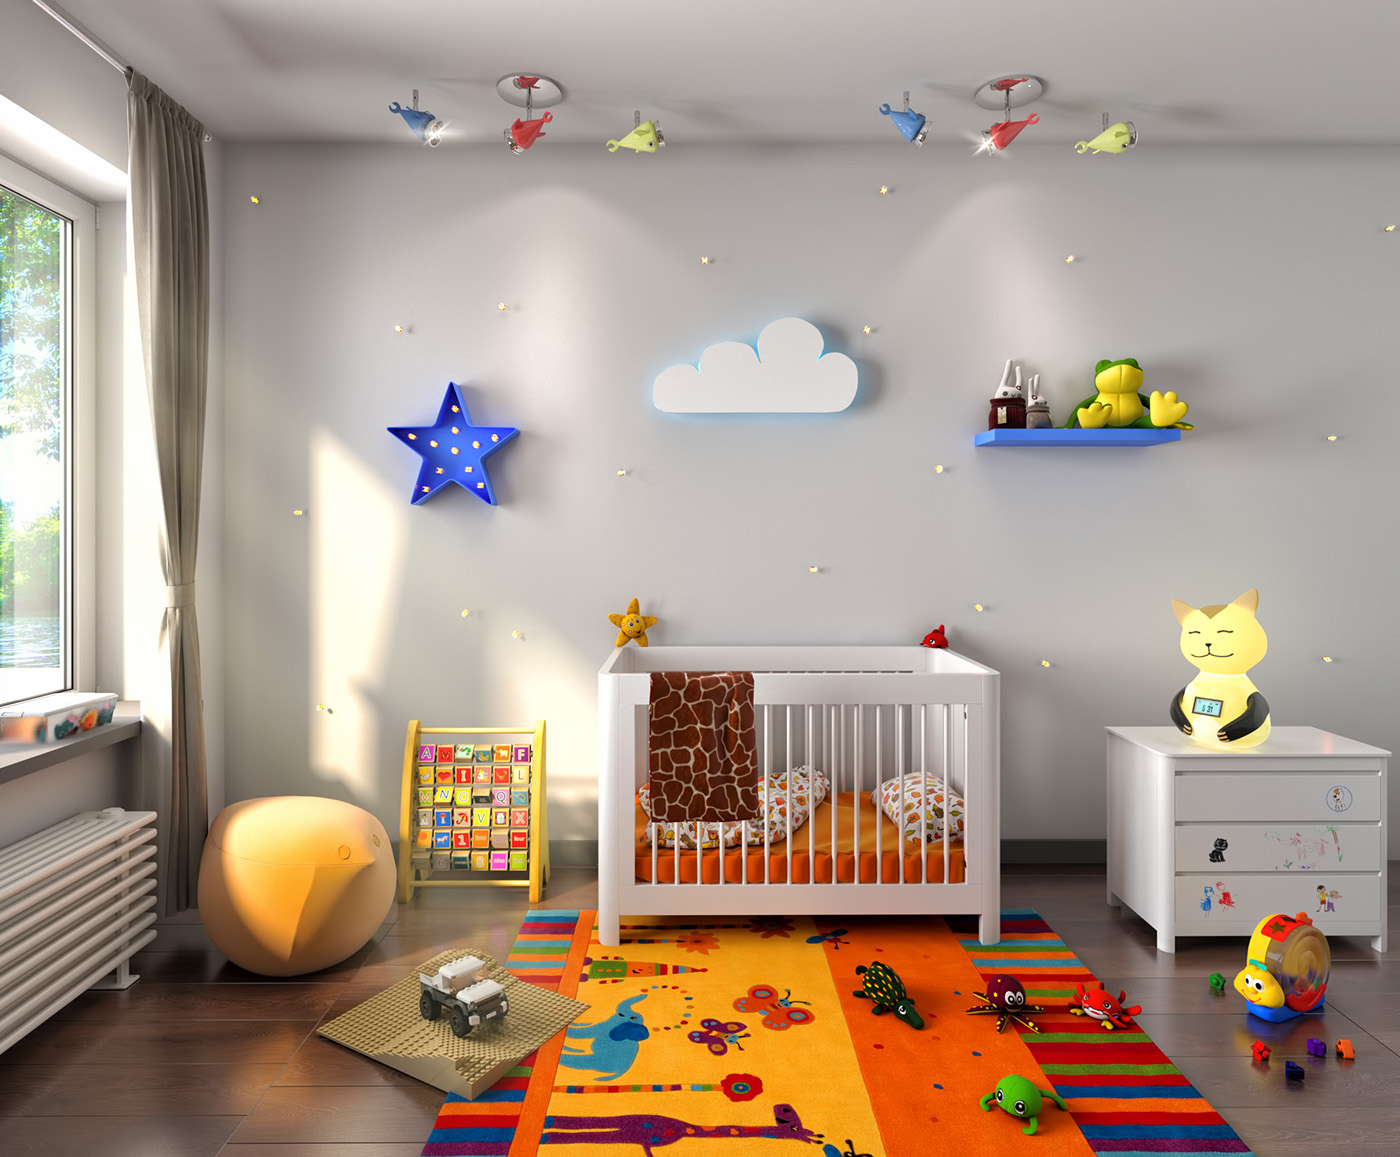 3dsmax 3drender kids baby bedroom Interior coronarenderer 3dvisualizer